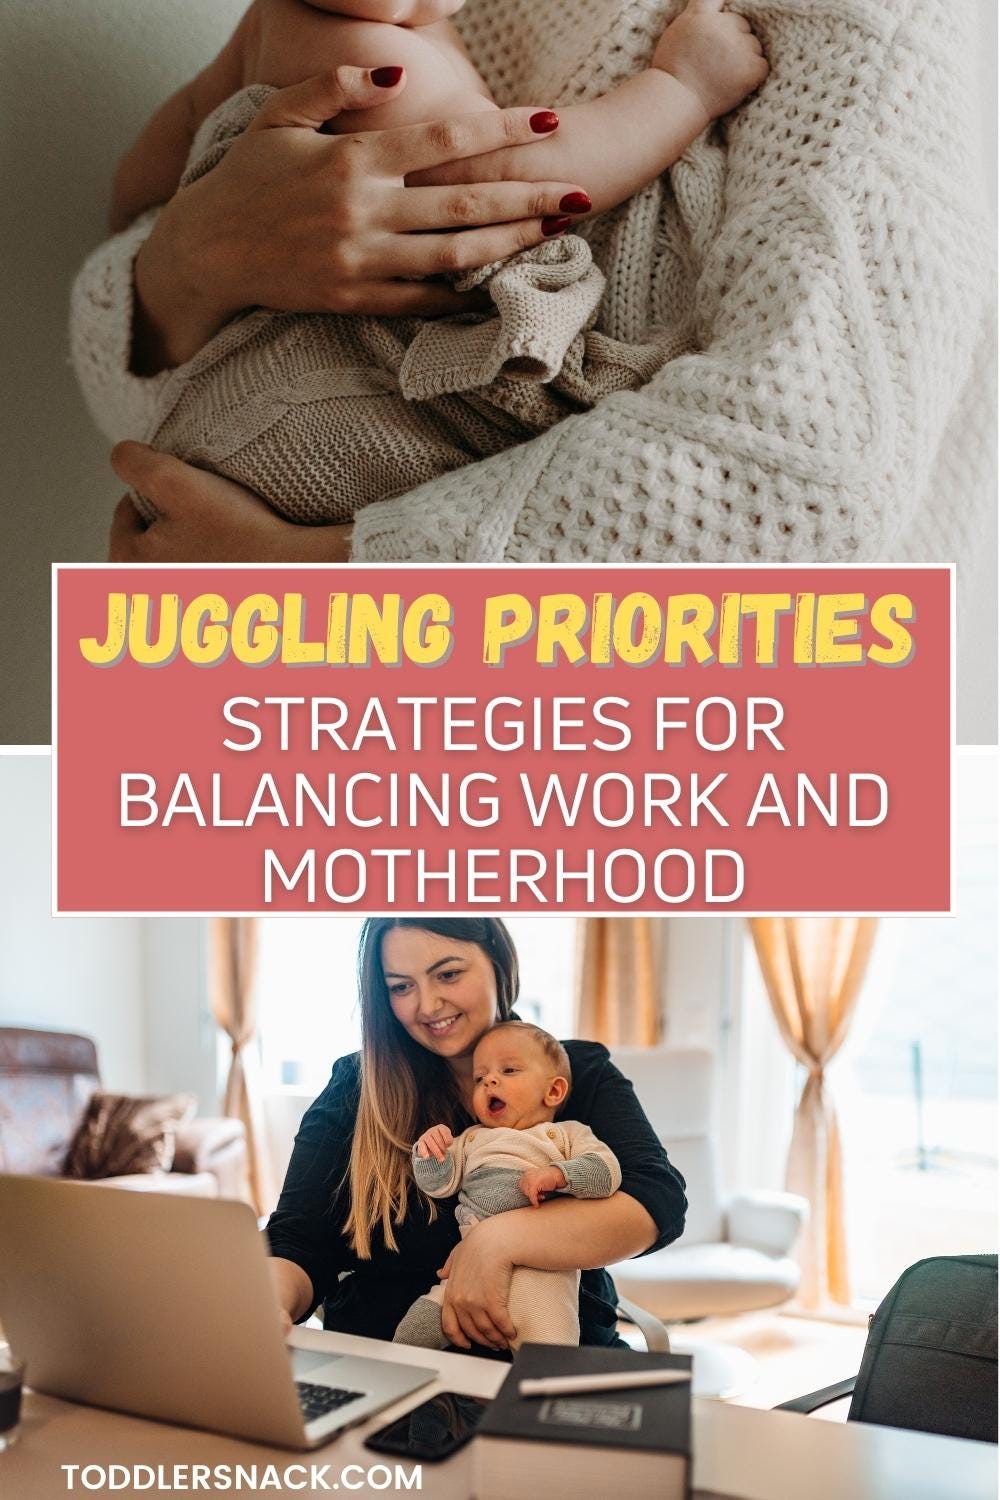 The Art of Balancing: Navigating Work and Motherhood Successfully